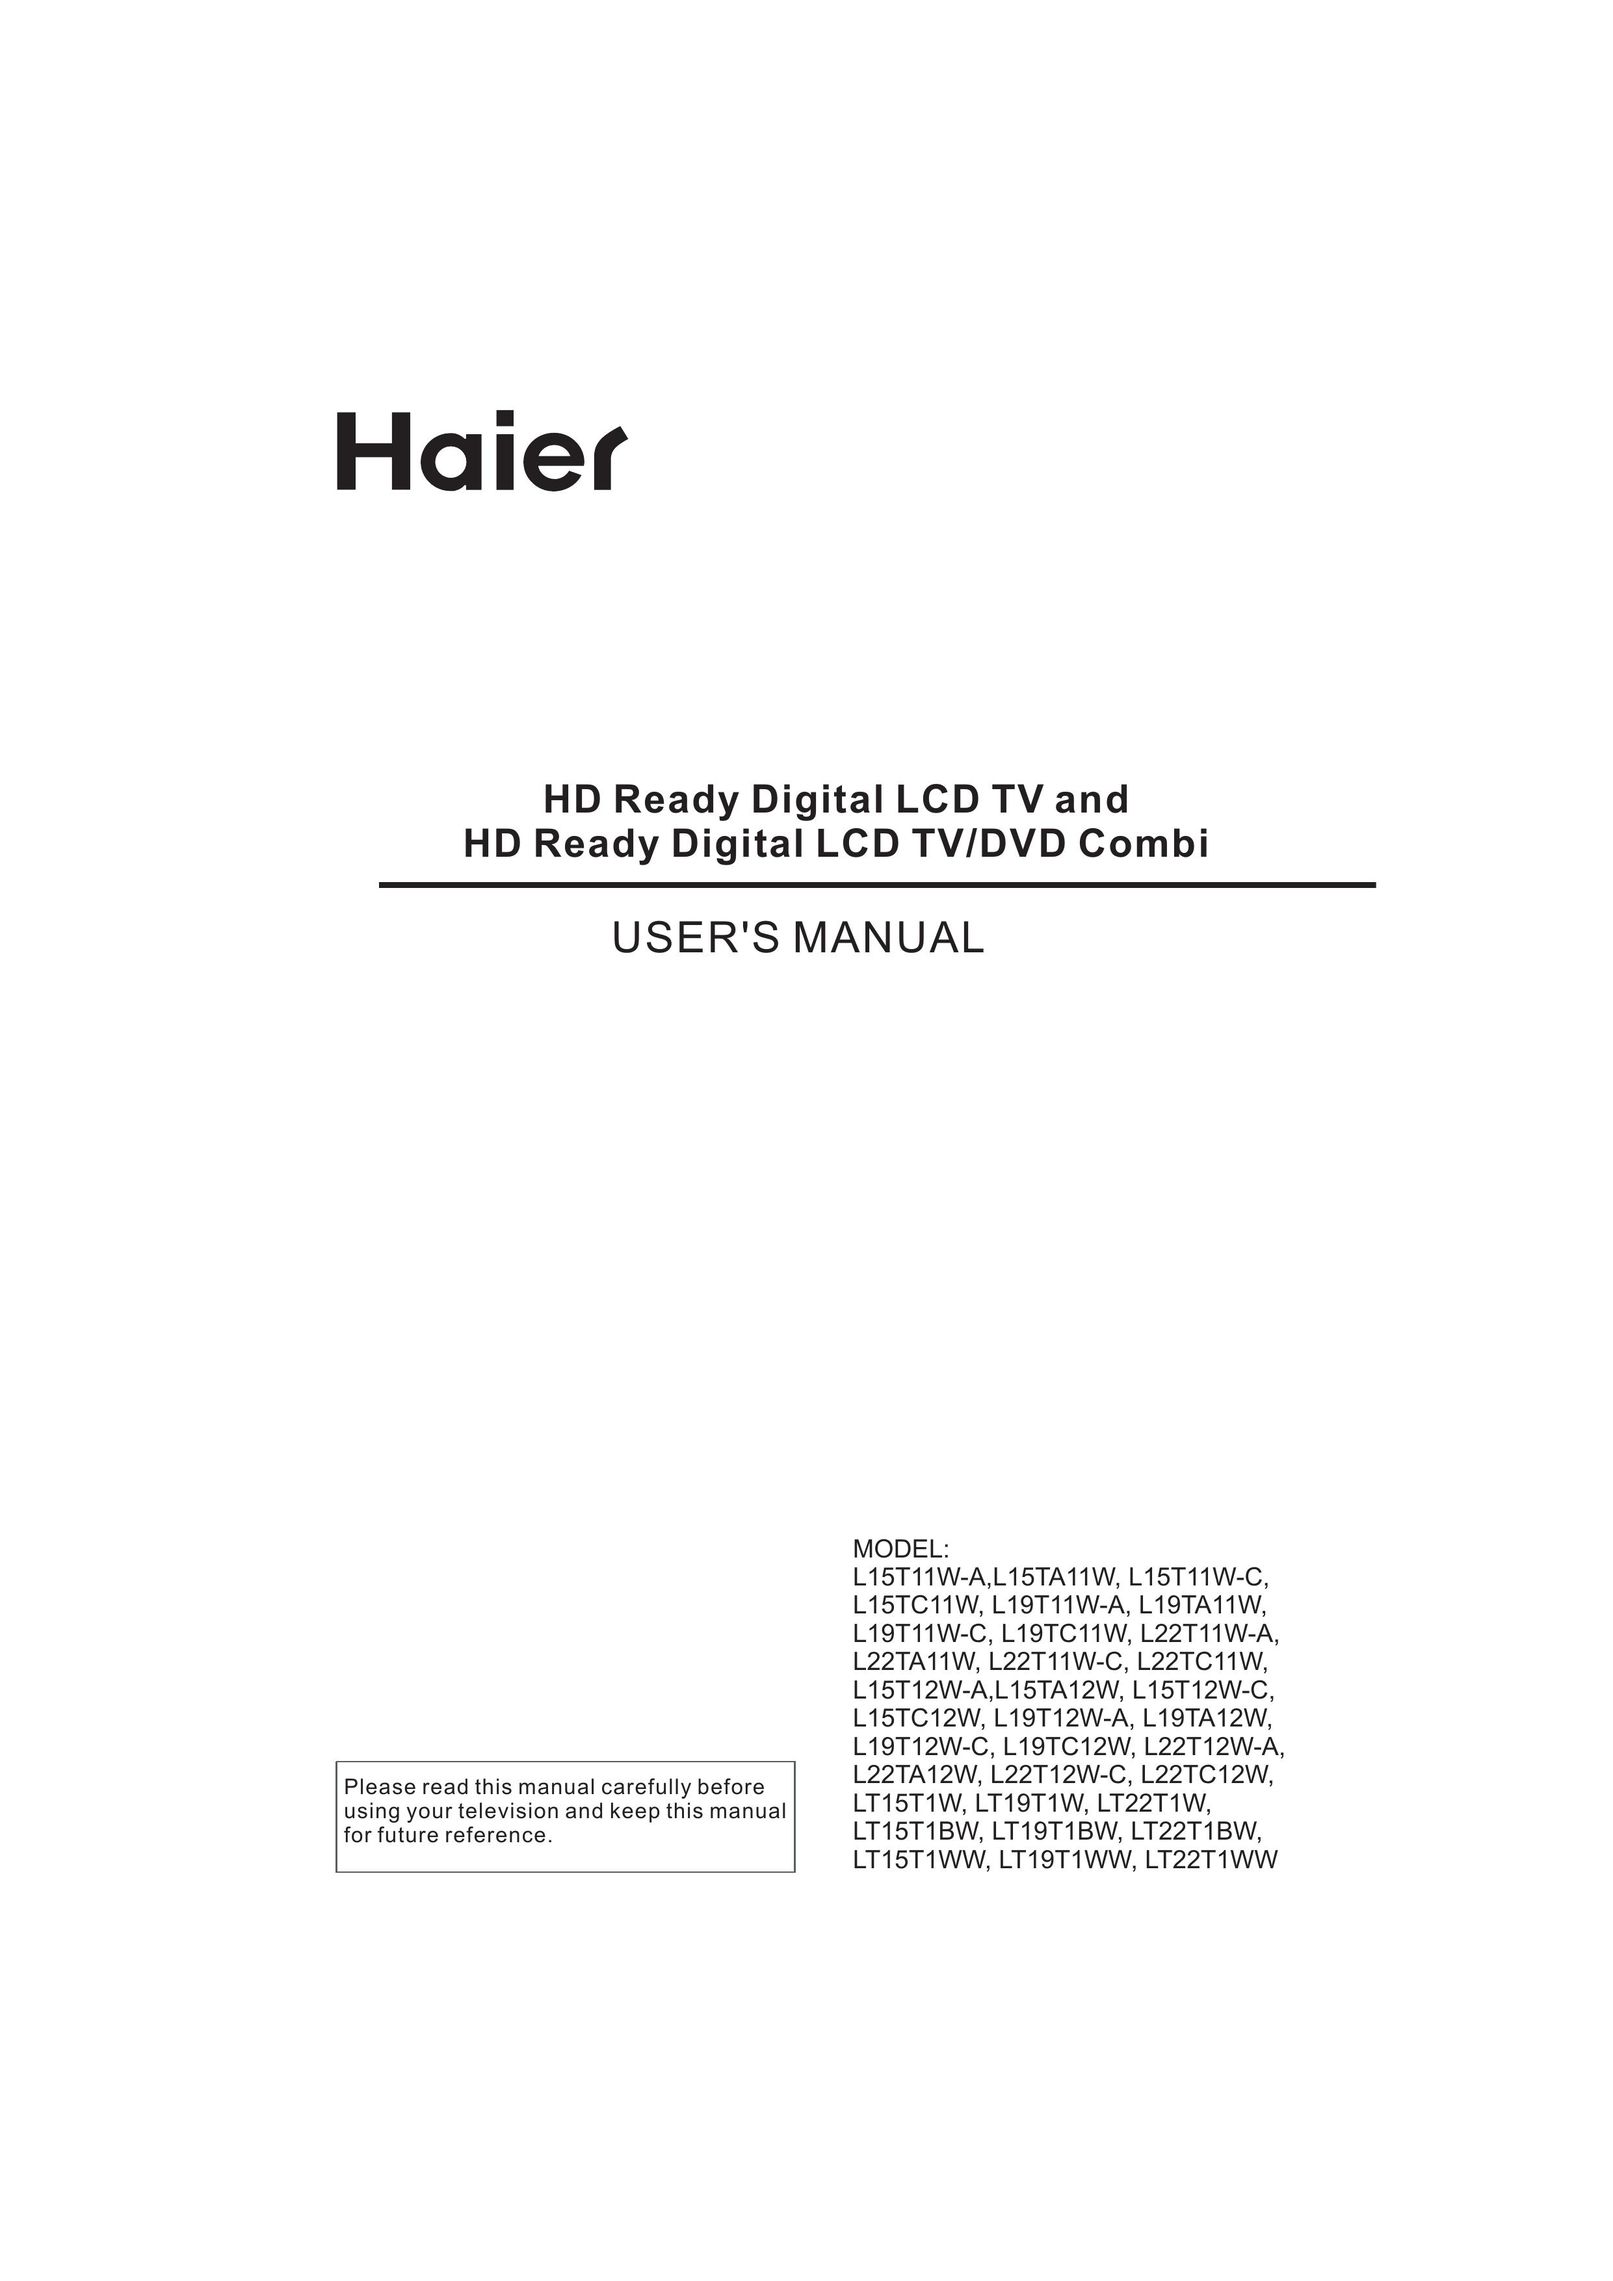 Haier L15T12W-A TV DVD Combo User Manual